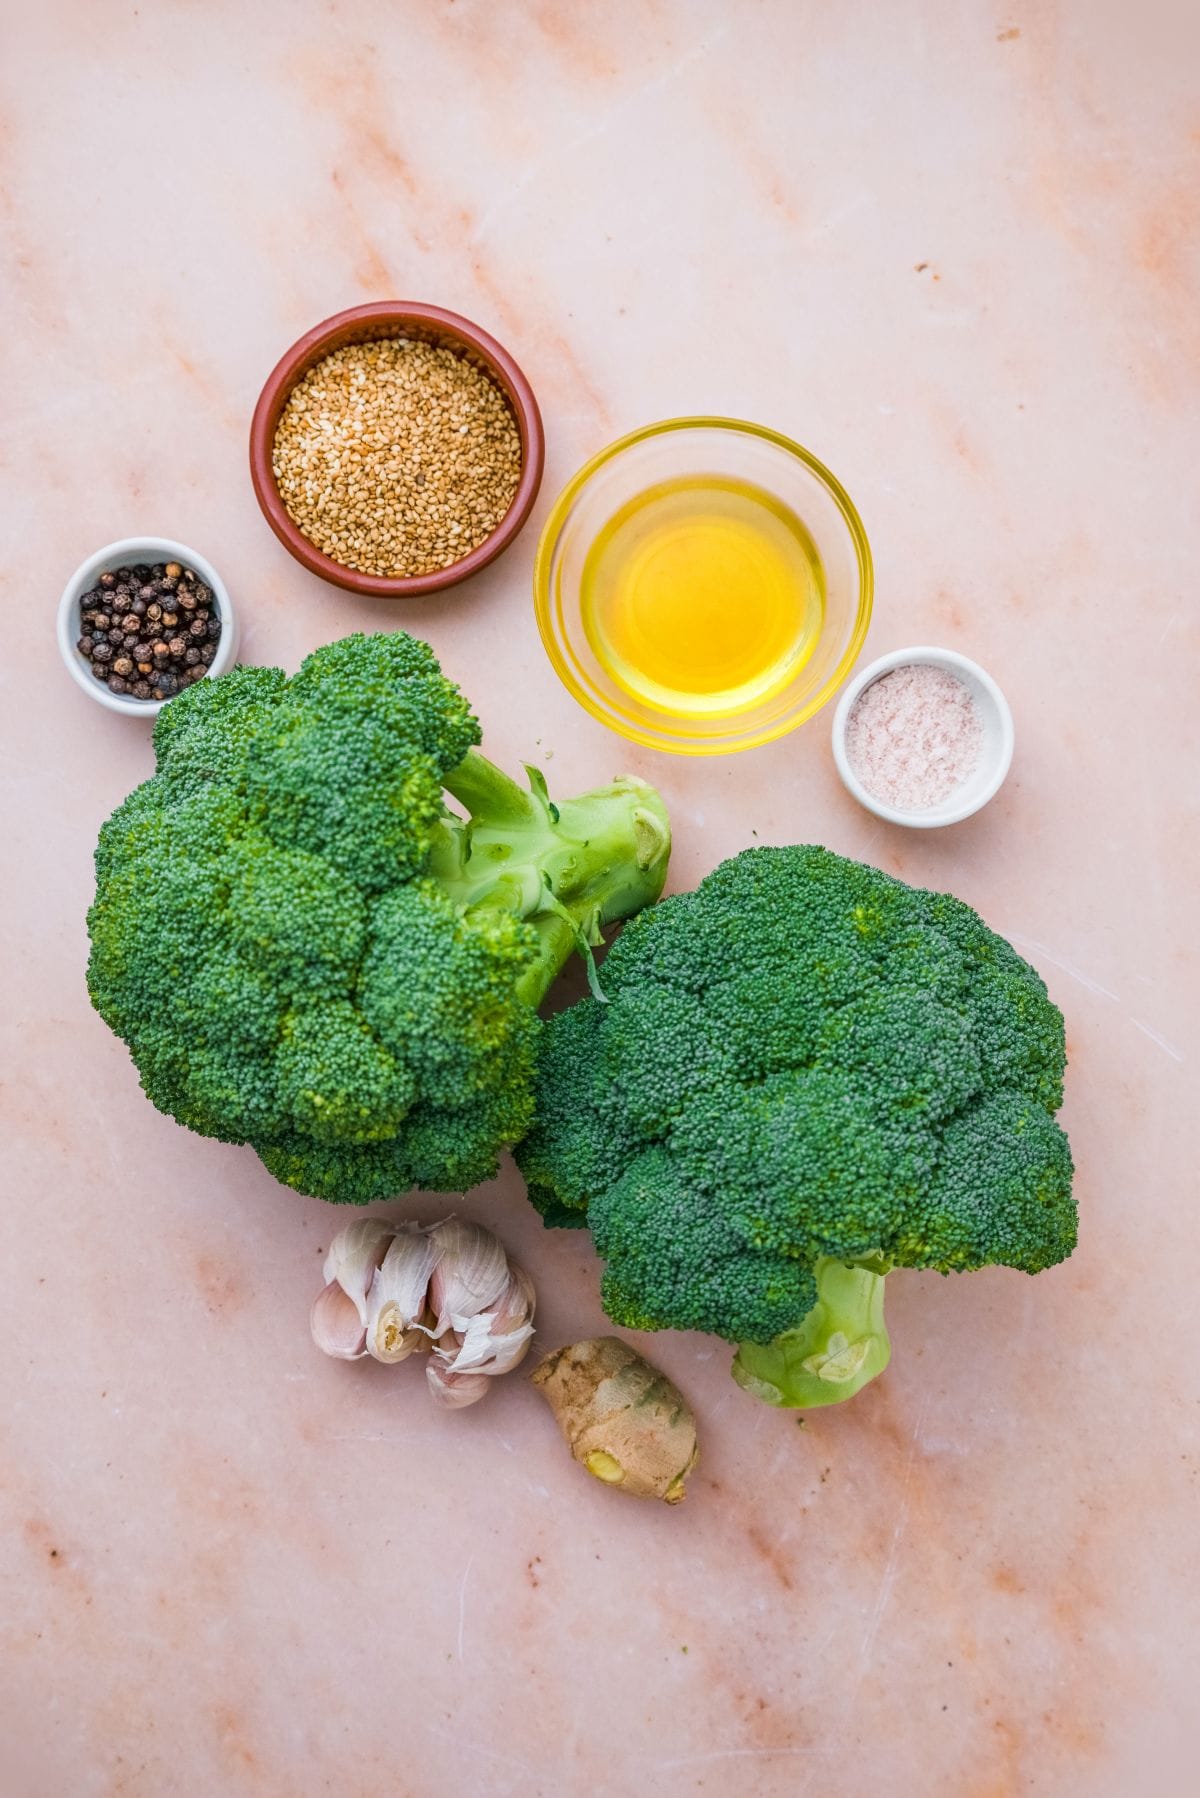 Sauteed broccoli ingredients